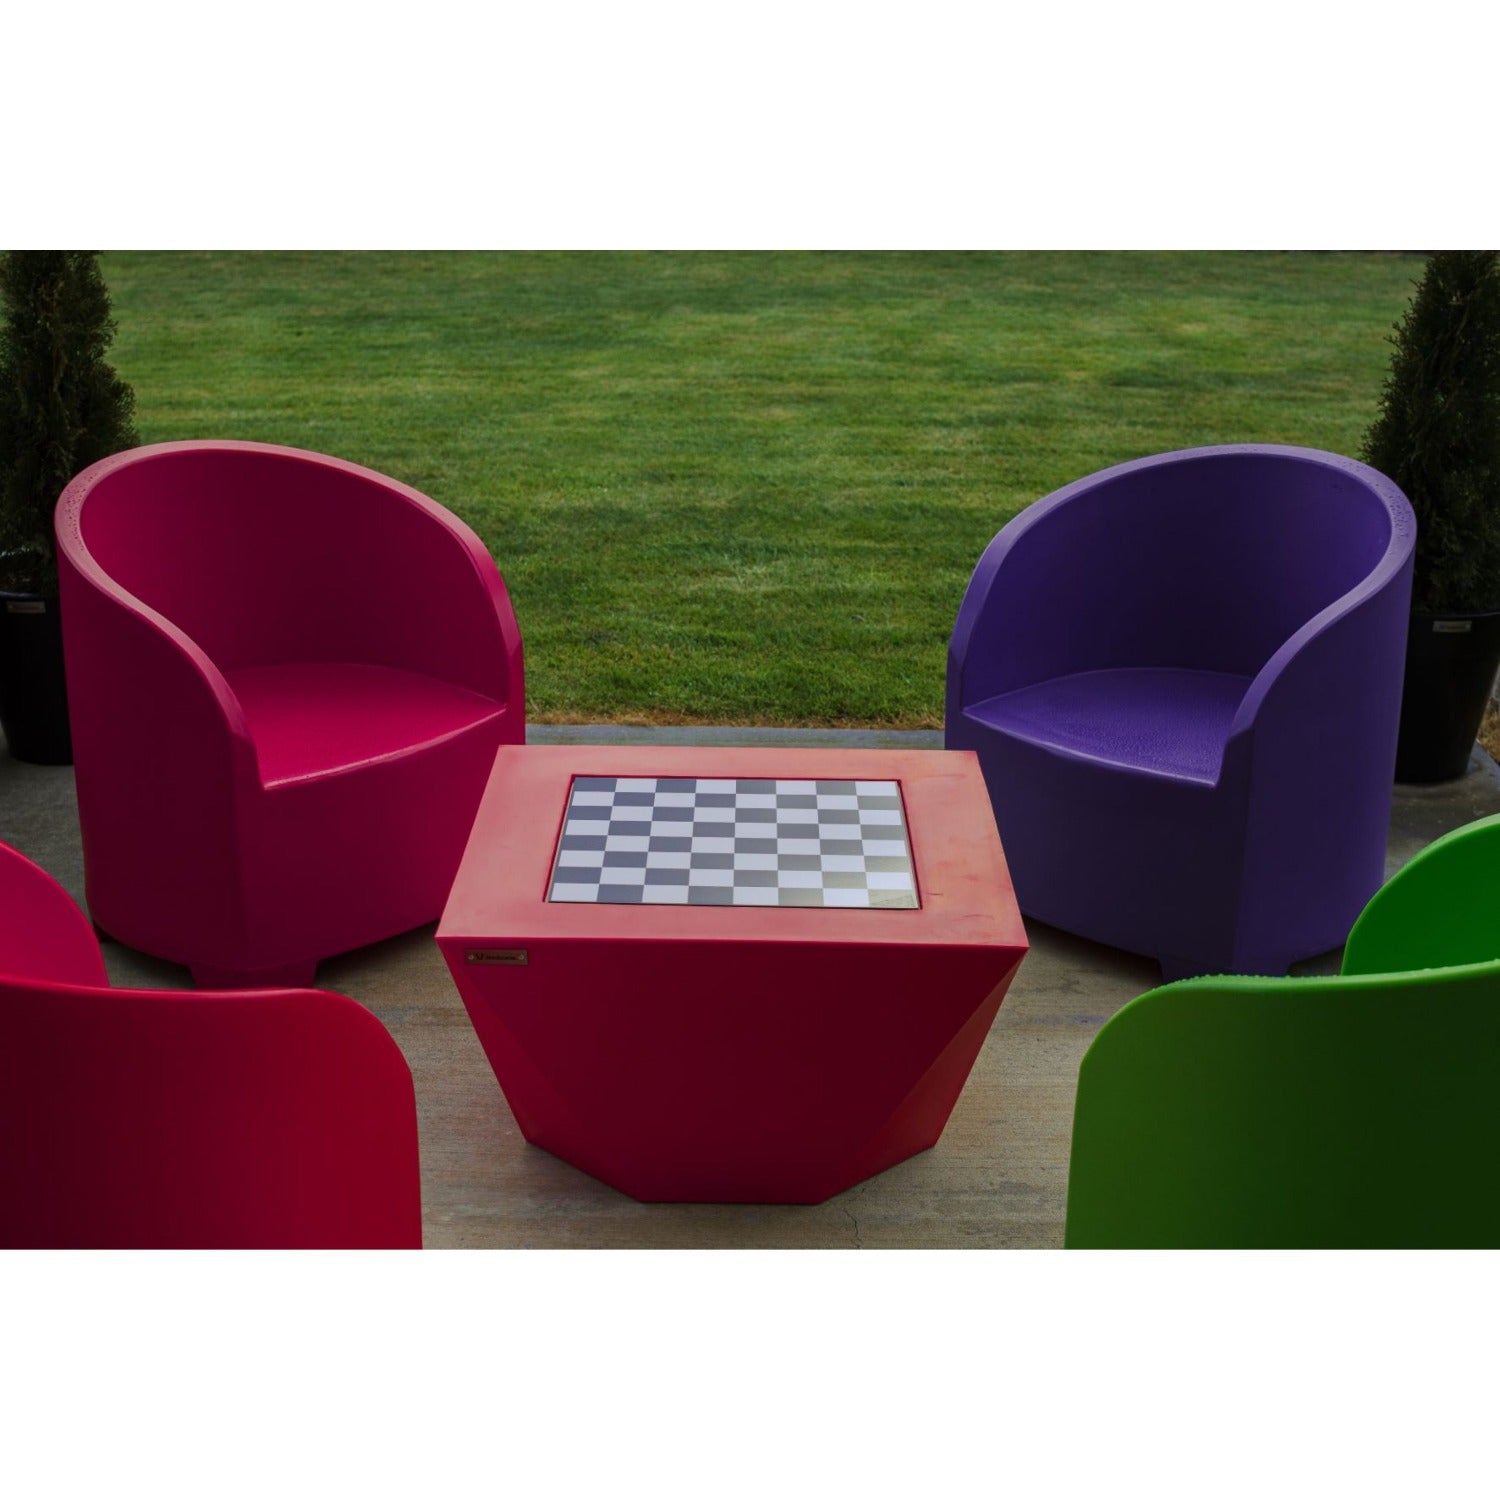 Orange, red, purple and green outdoor furniture. Modscene outdoor furniture NZ.